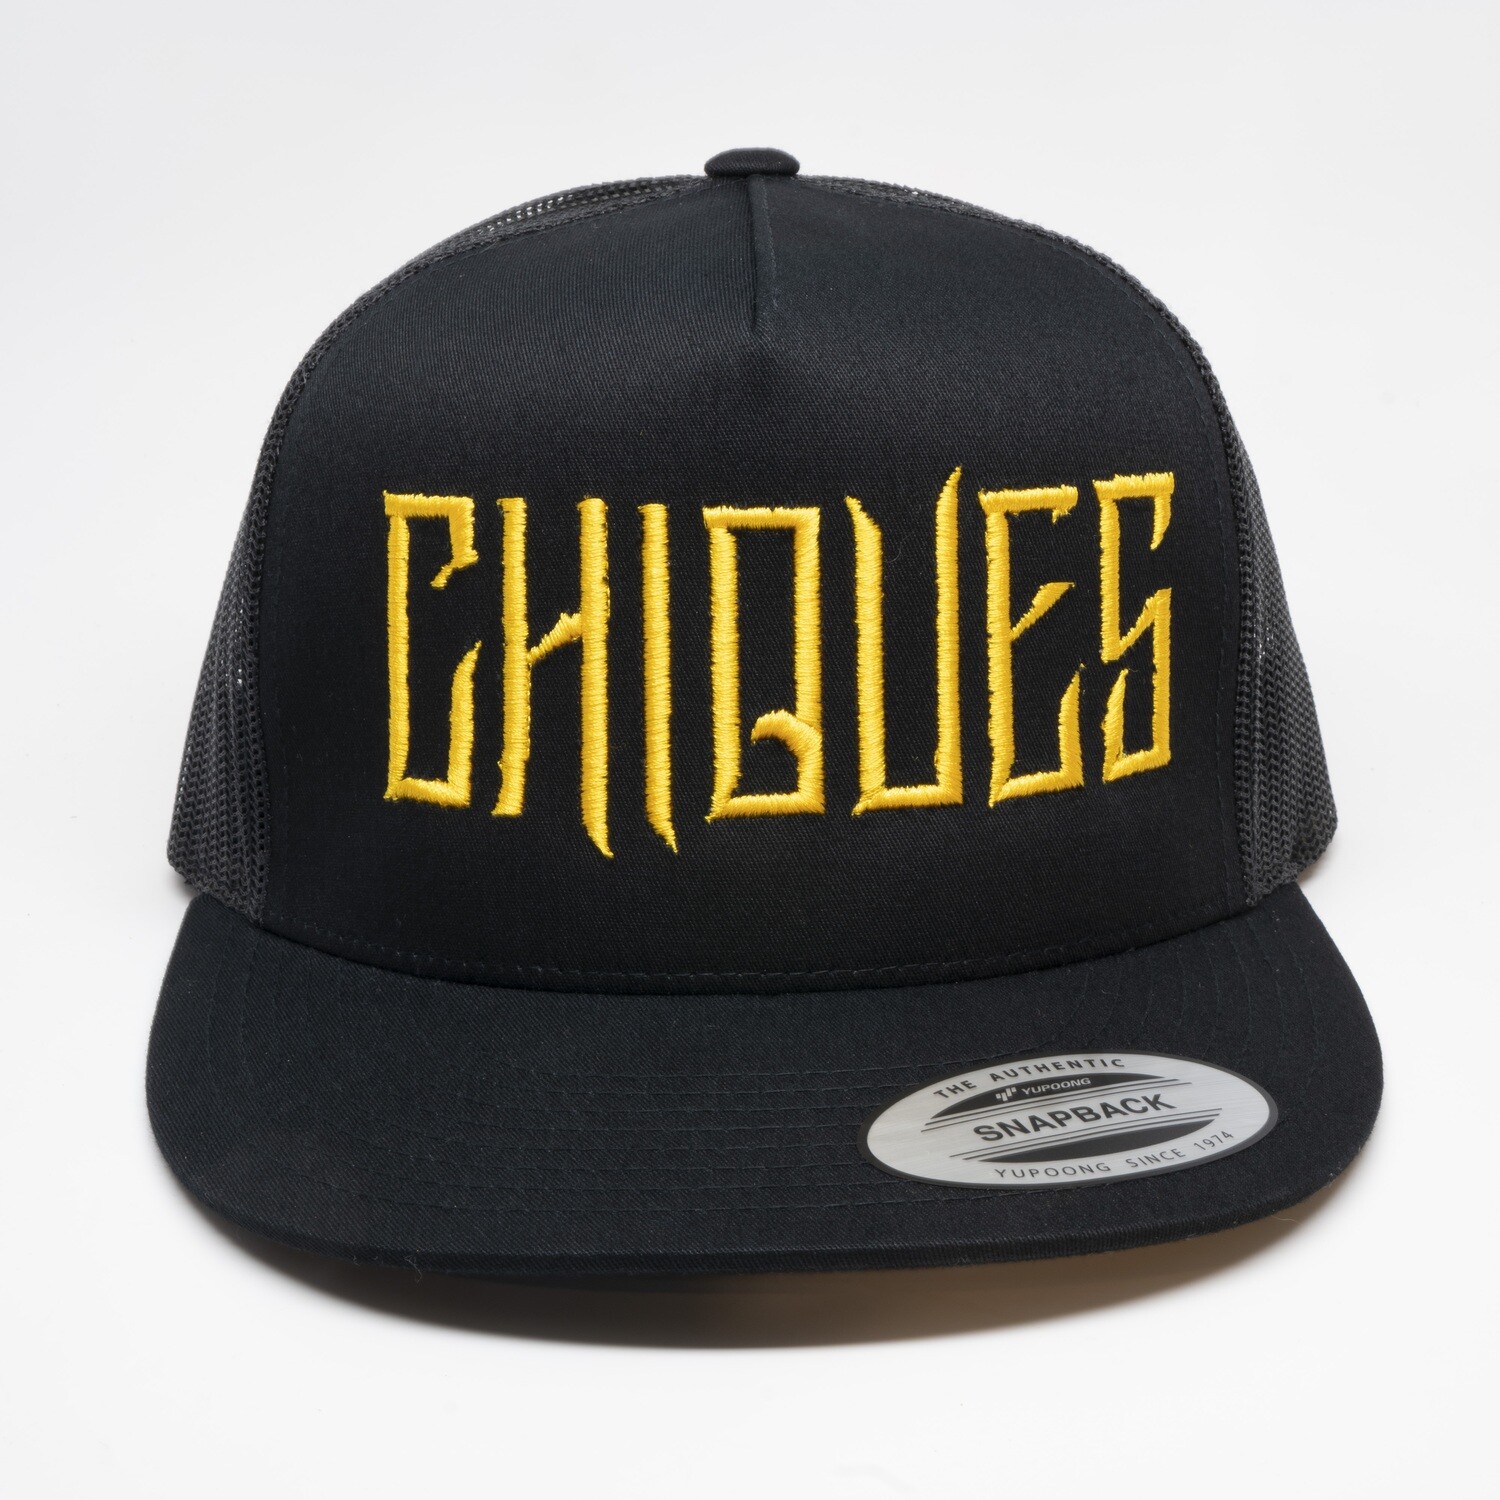 CHIQUES - Snapback Hat